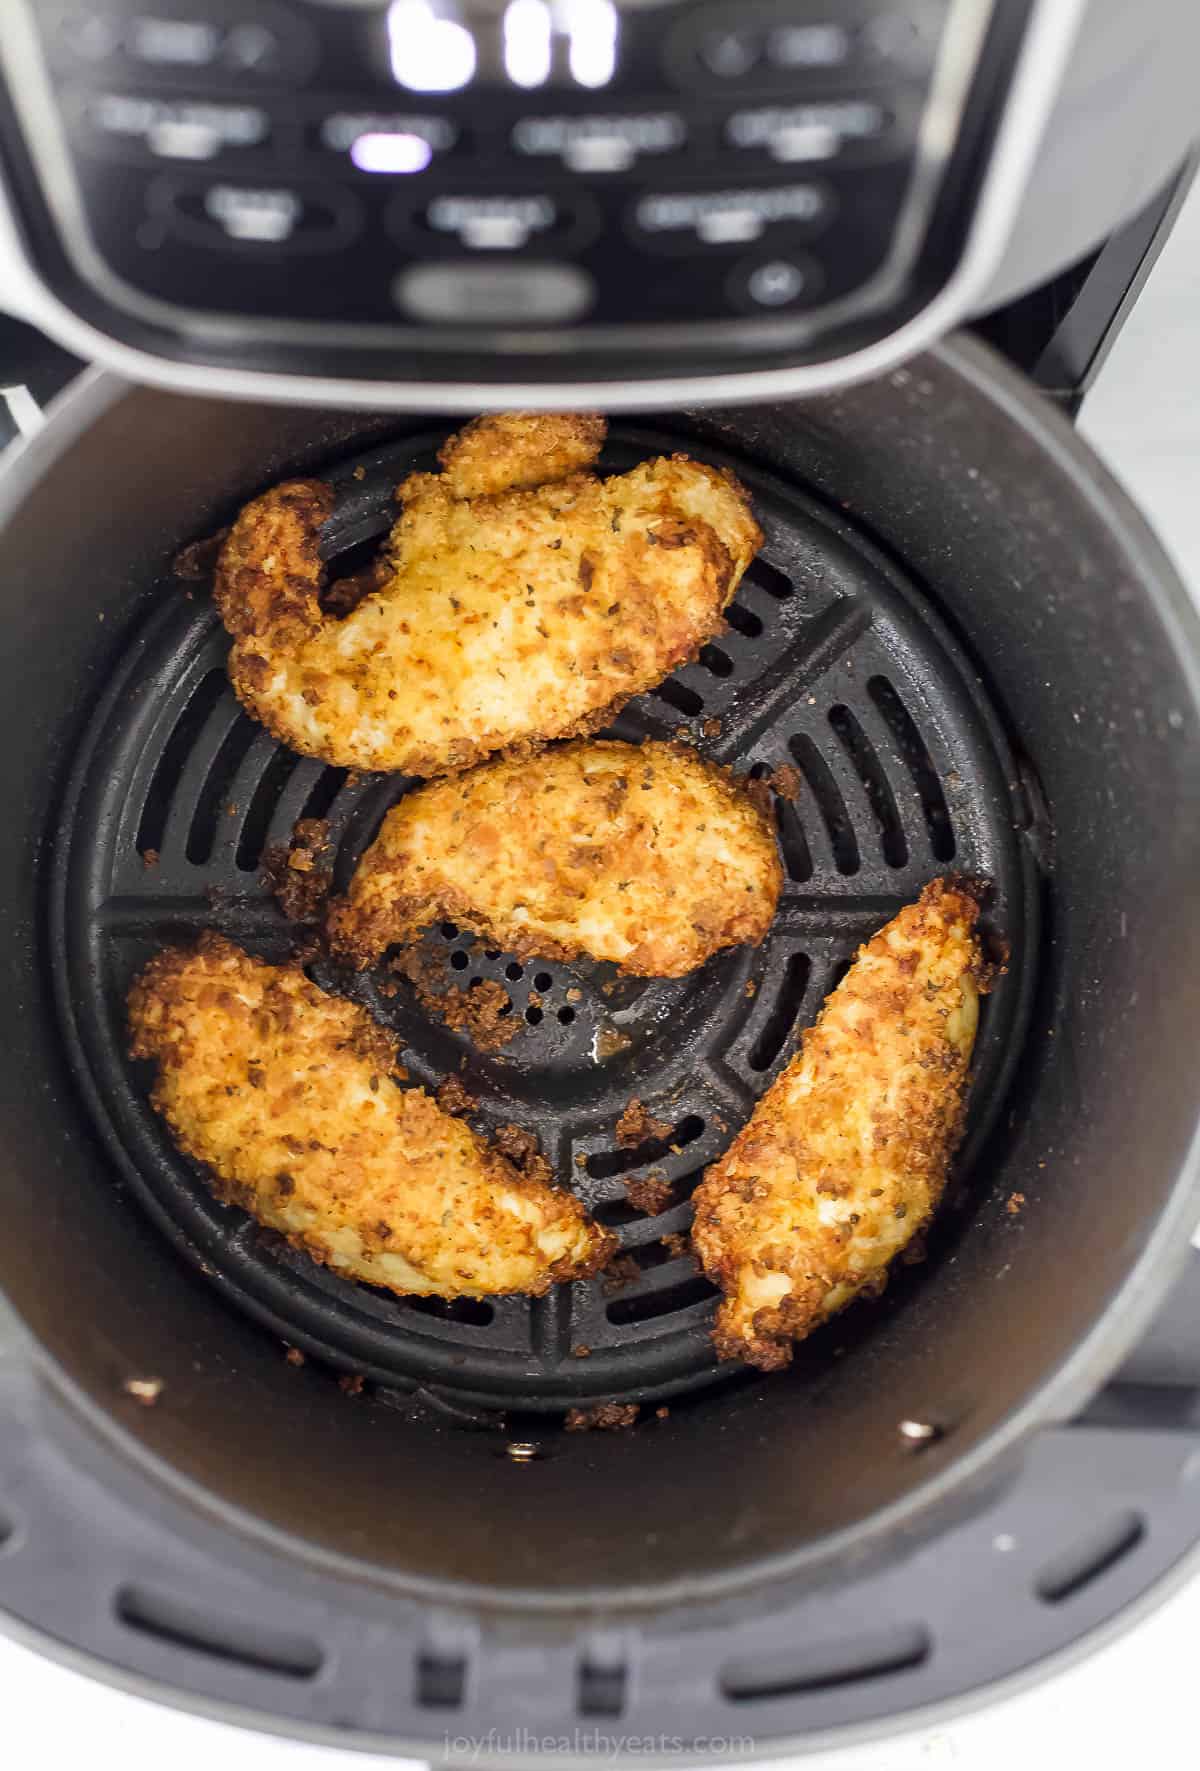 Four chicken tenders inside of a greased Air Fryer basket